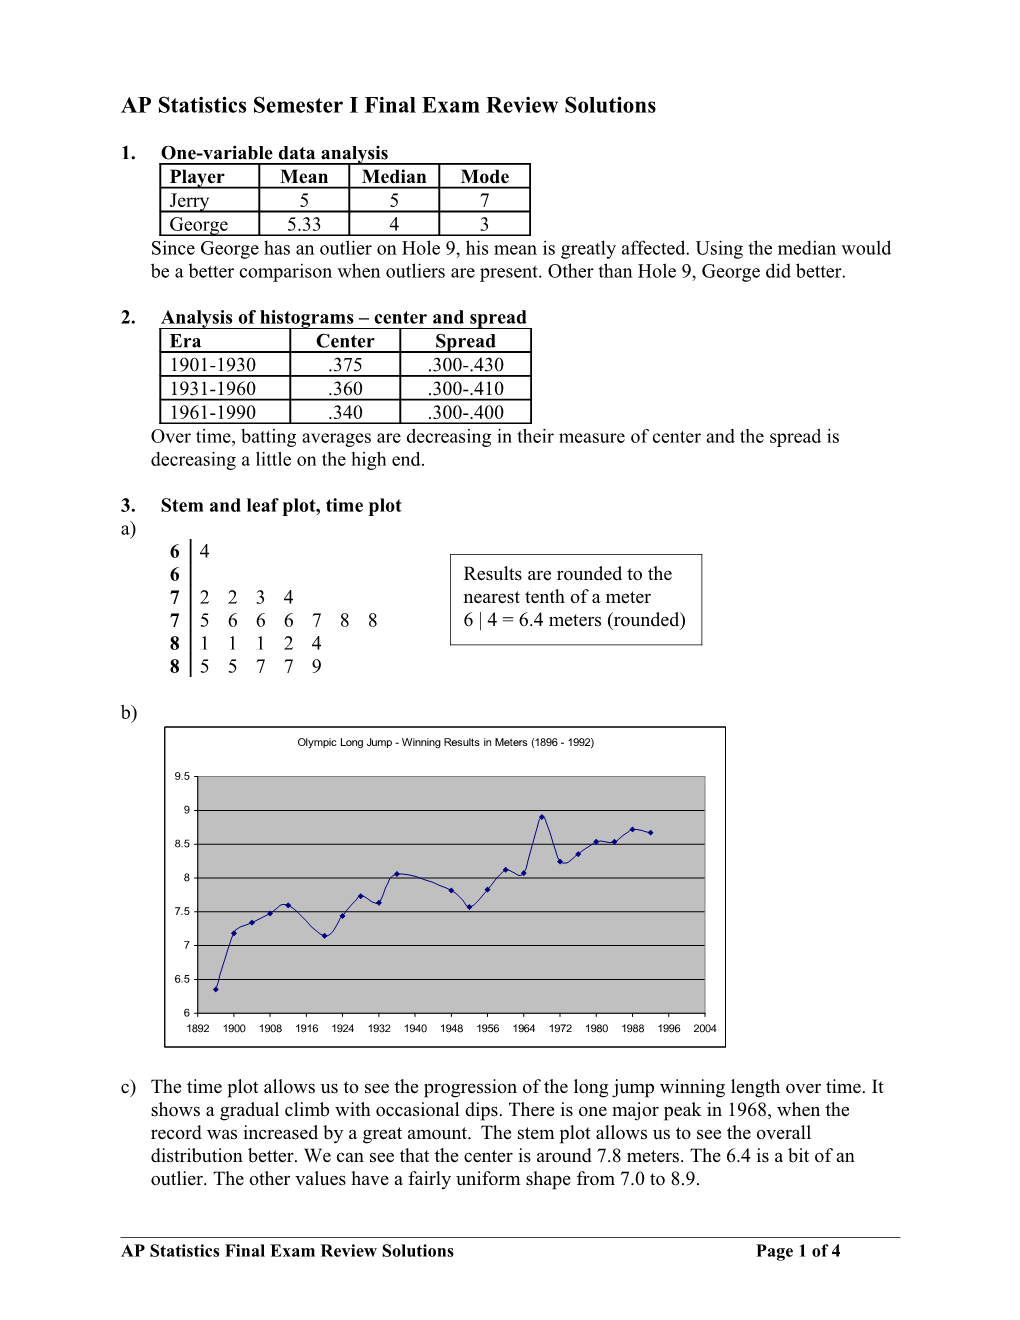 AP Statistics Final Exam Review Solutions